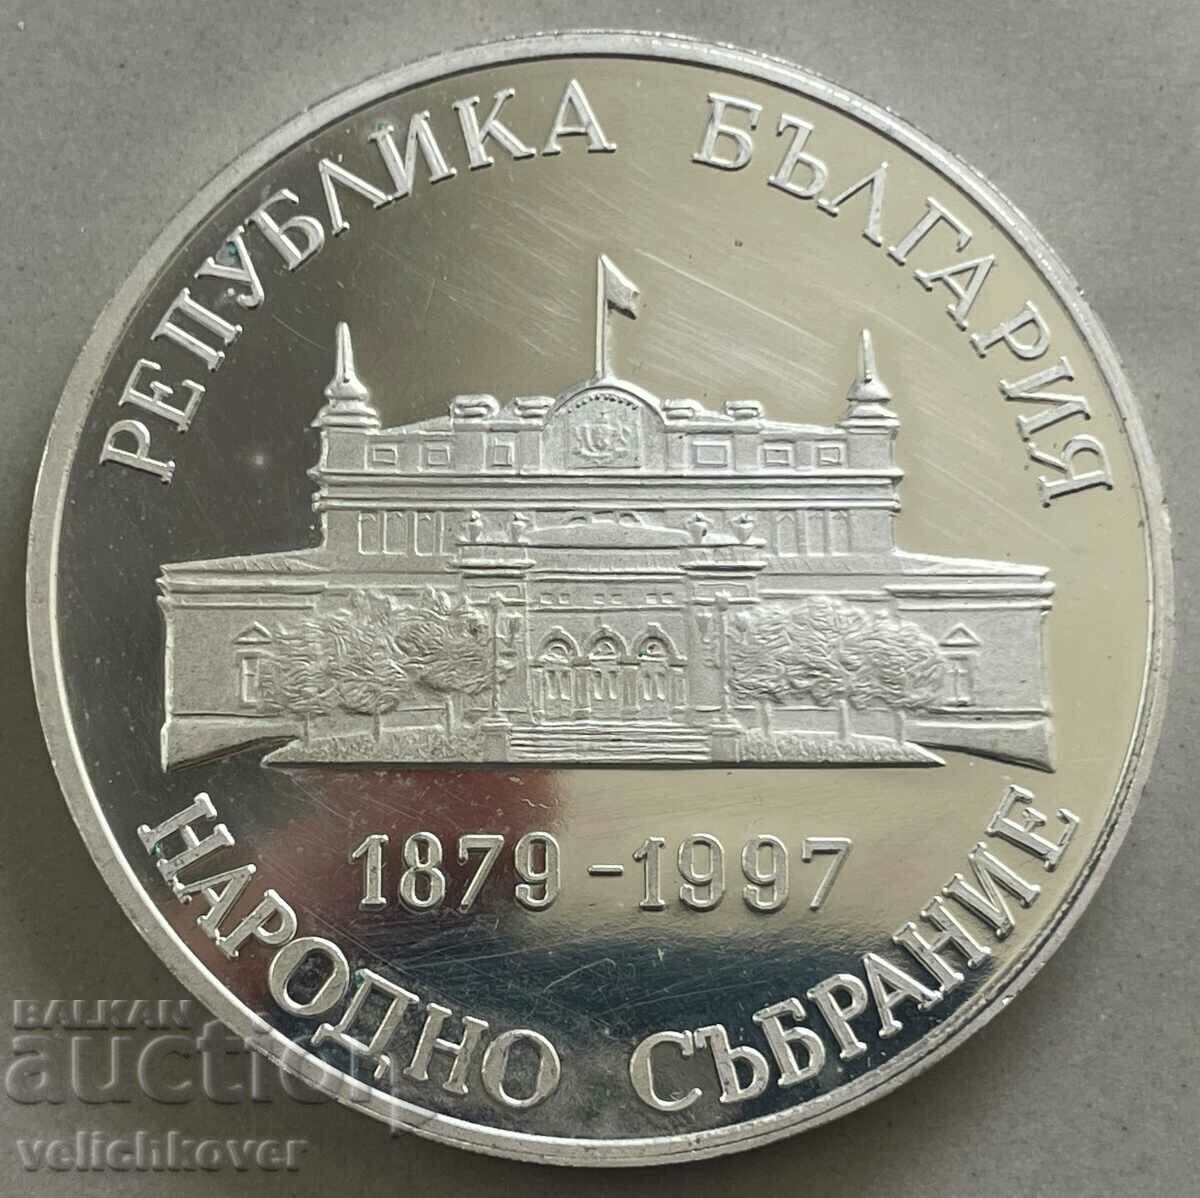 34600 Bulgaria plaque 120. Εθνοσυνέλευση Κοινοβούλιο 1997